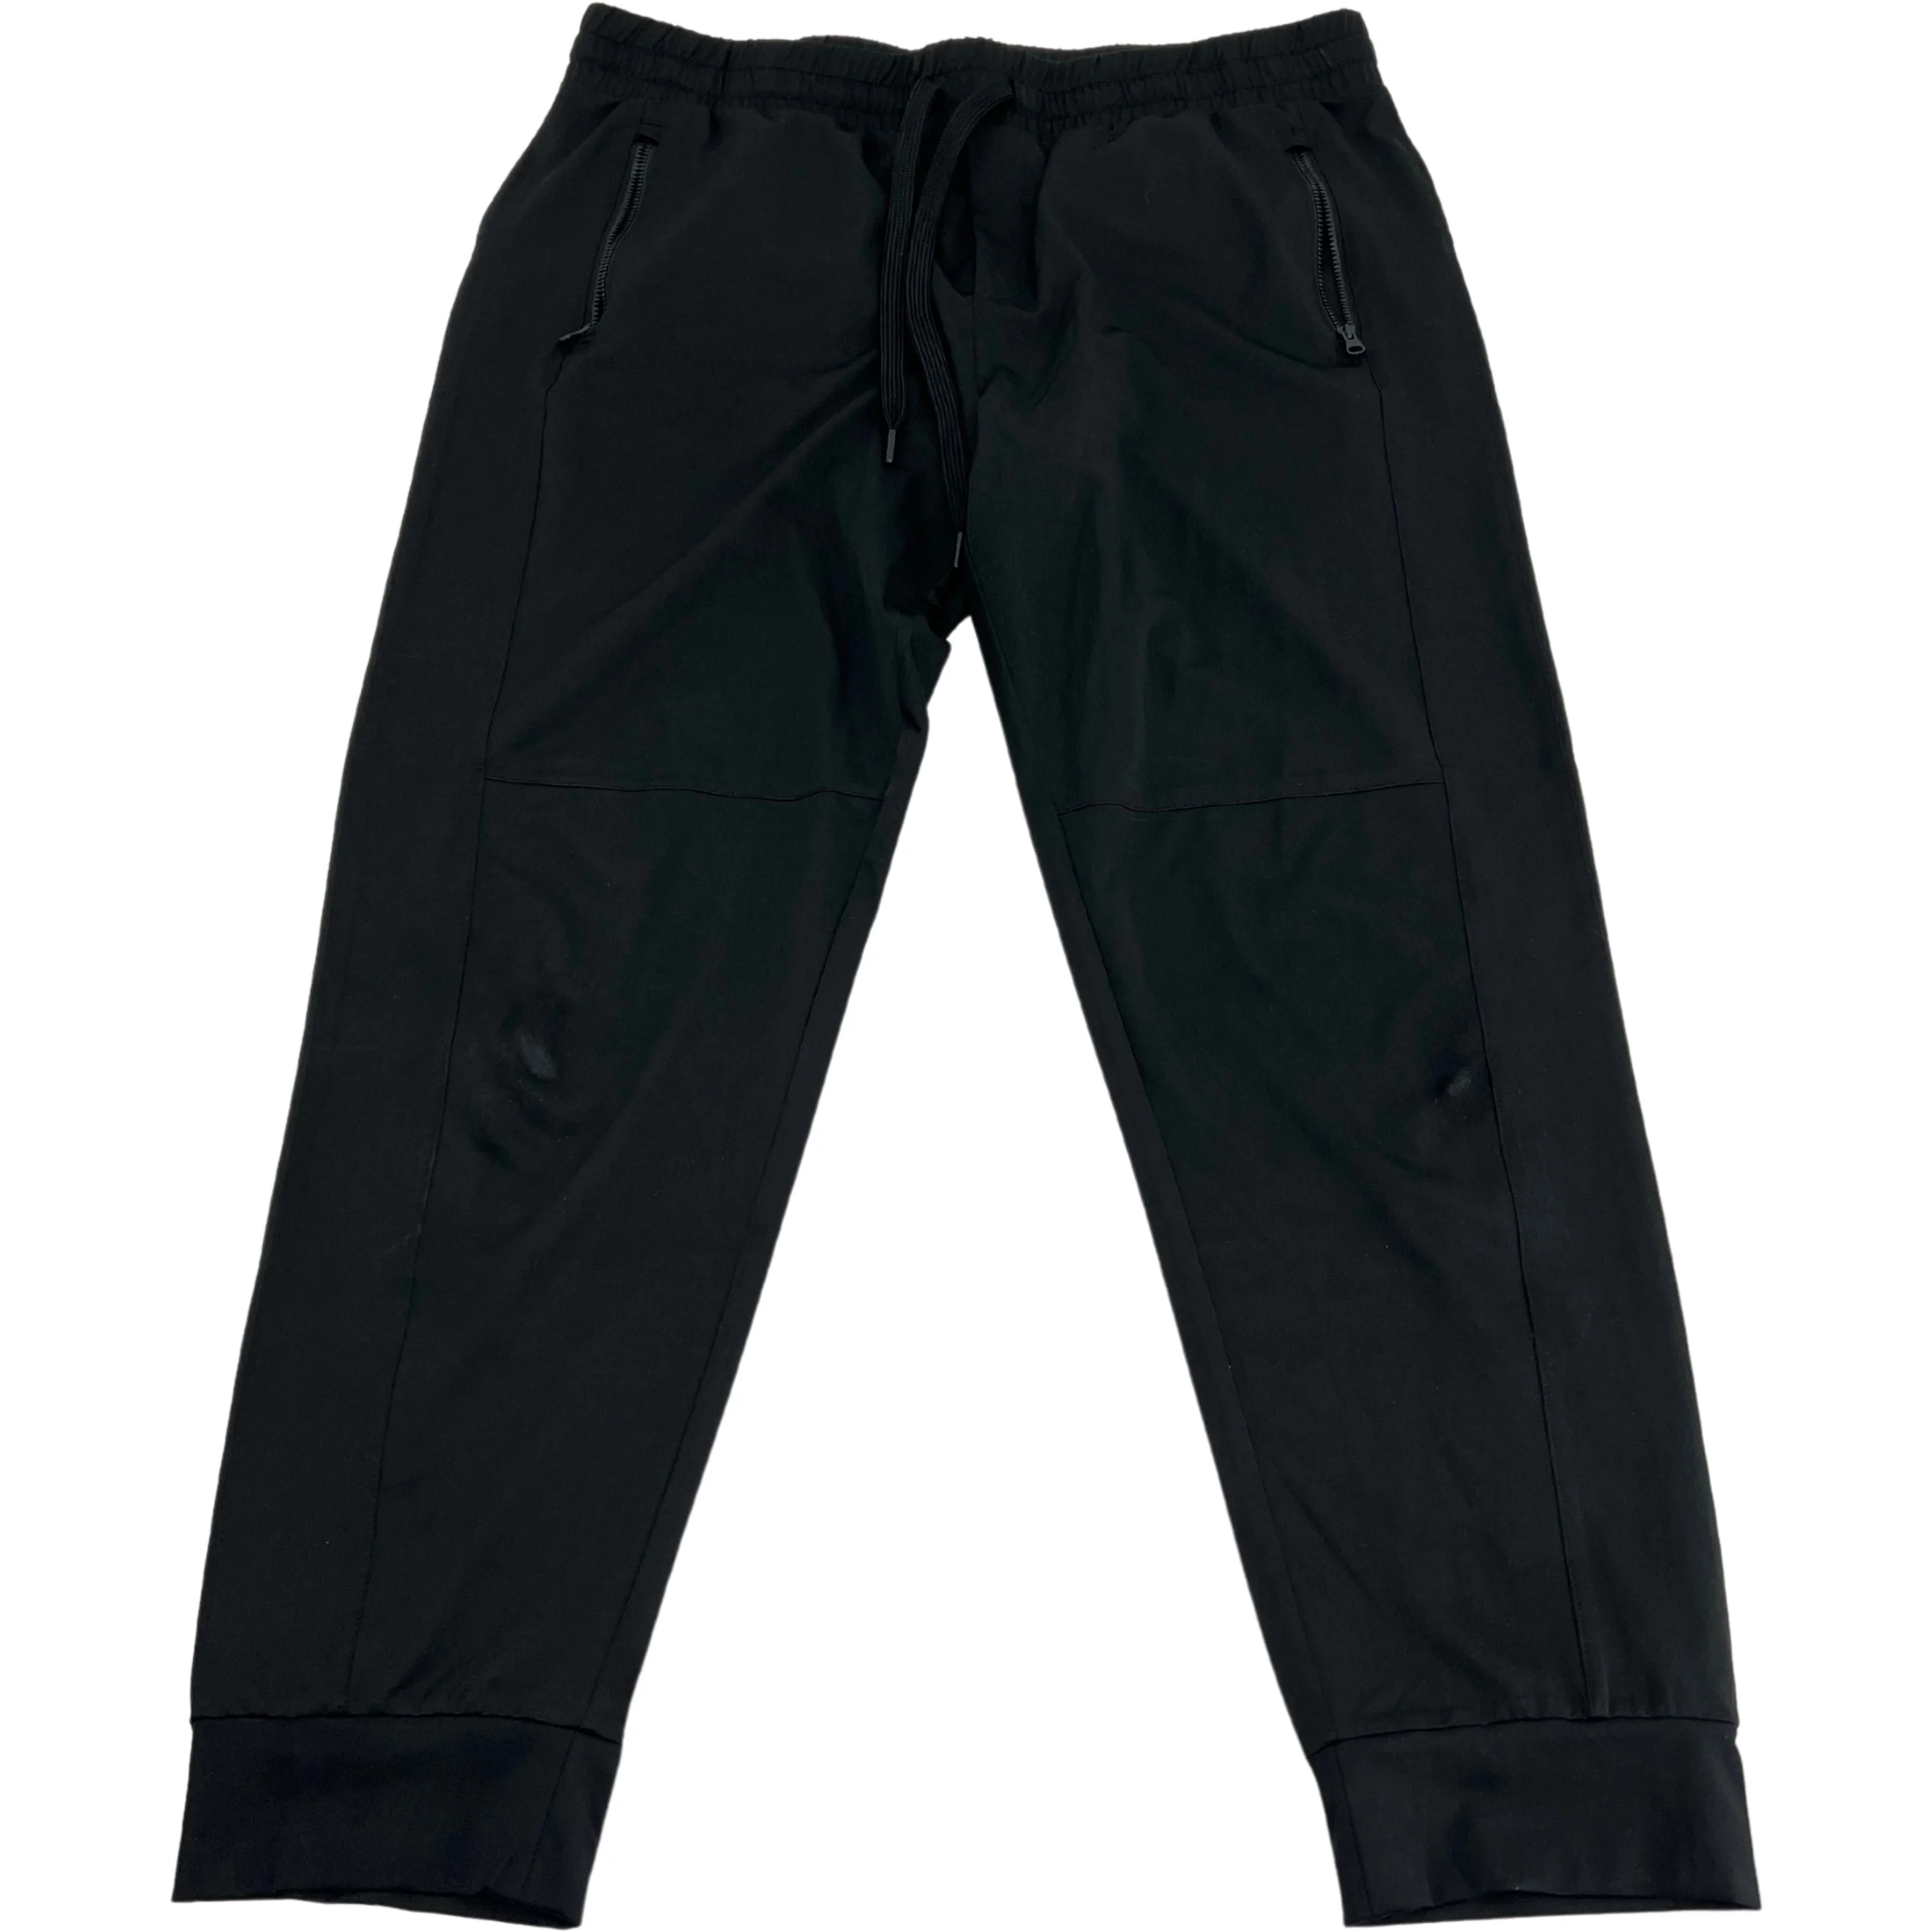 Tek Gear Black Tie Jogger Pants Women's XL 18 20